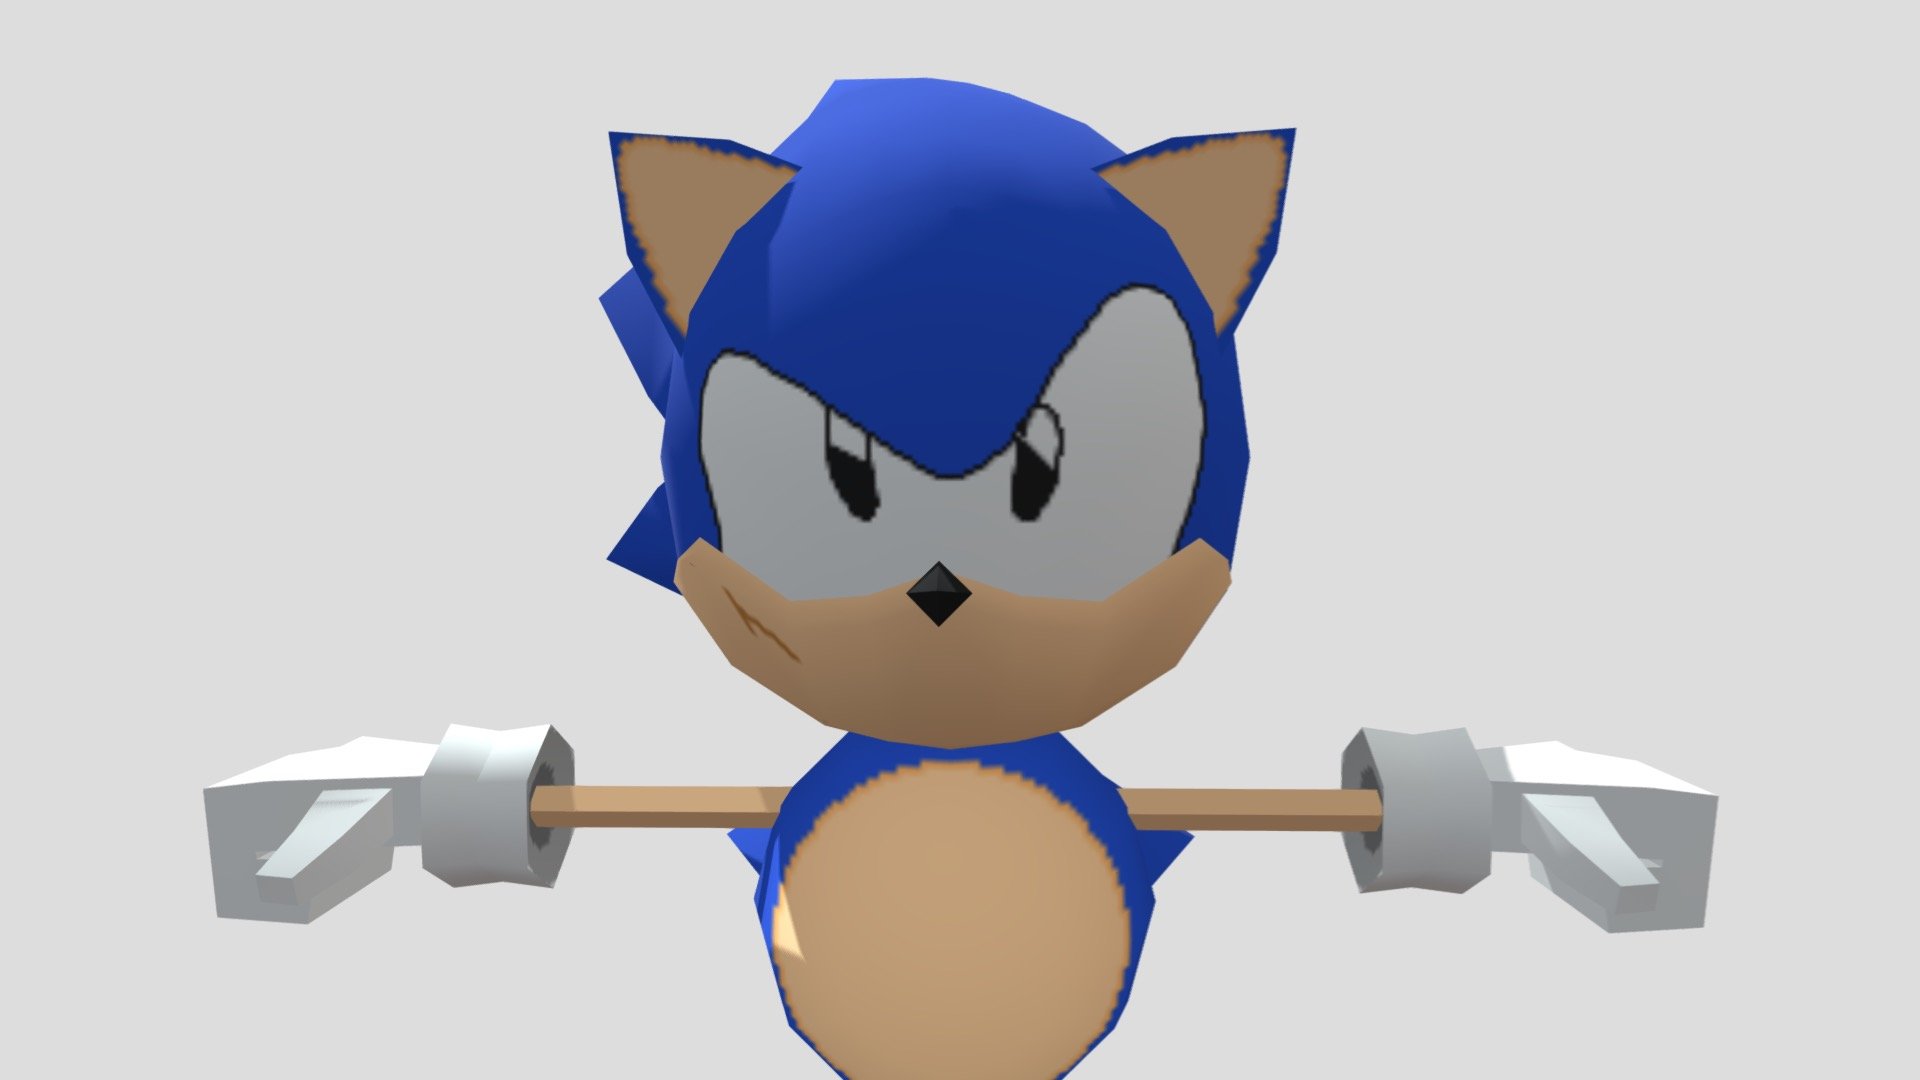 Custom / Edited - Sonic the Hedgehog Customs - Super Sonic (Sonic